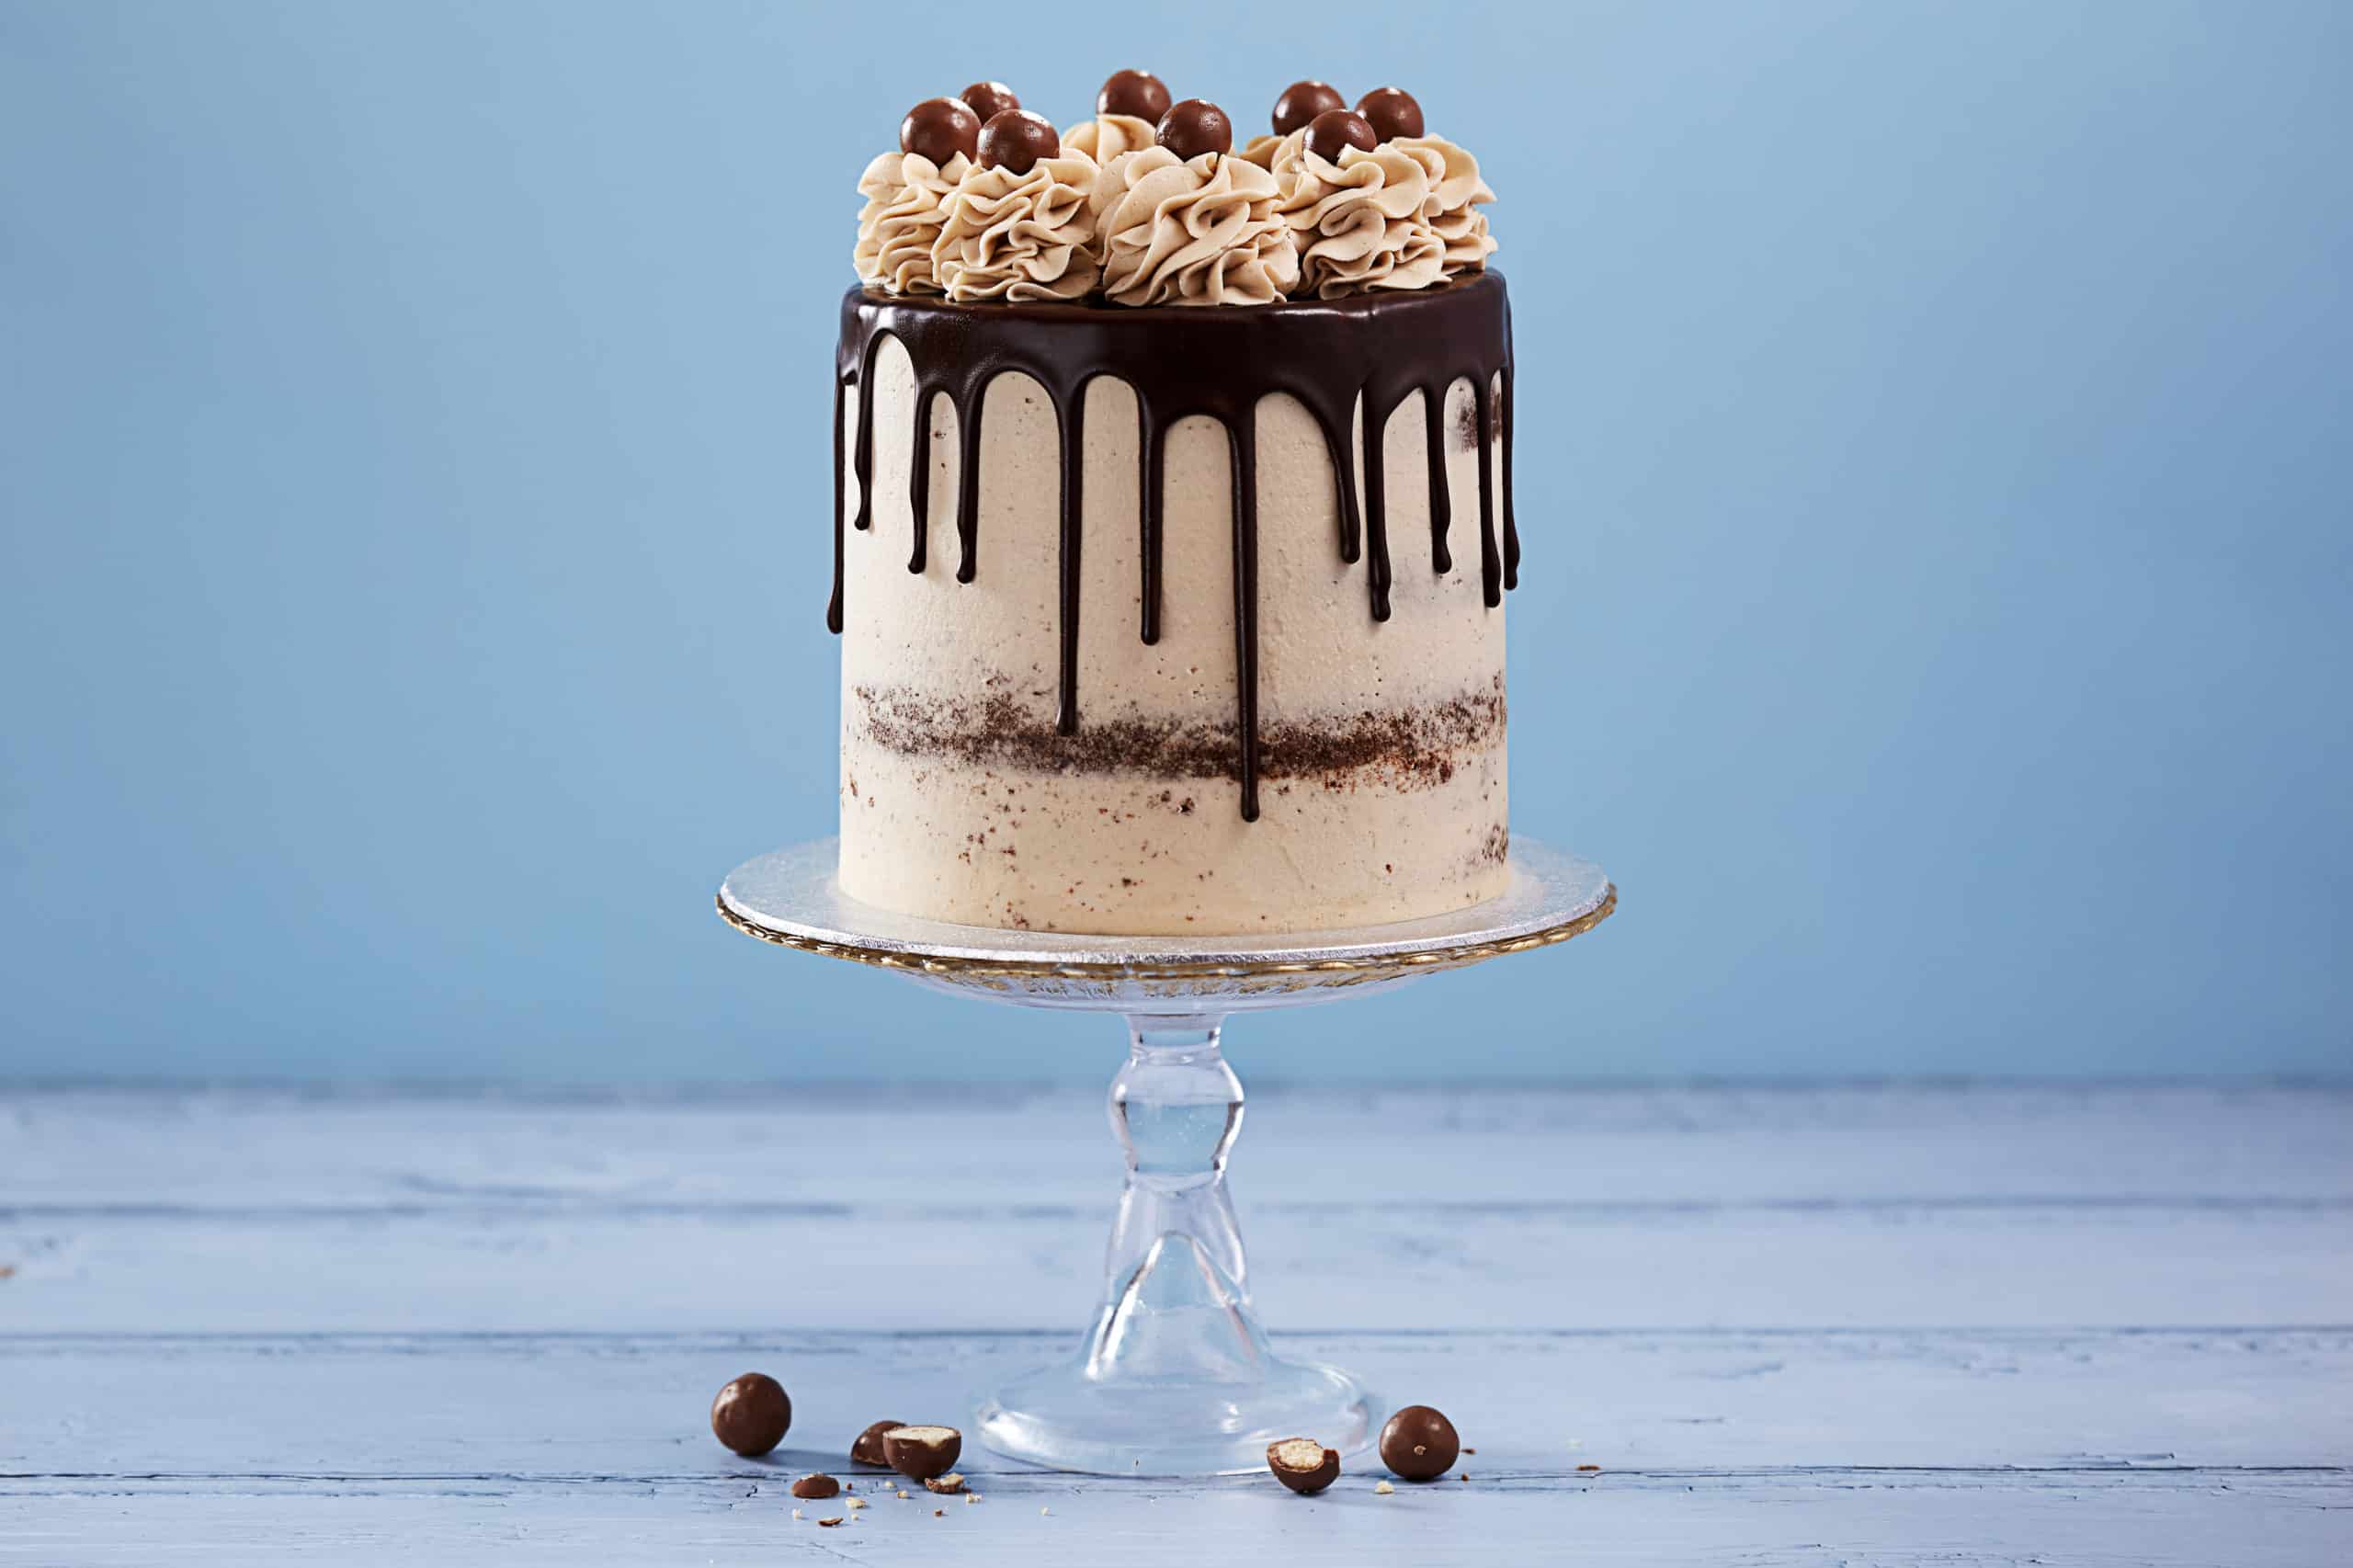 Malteser Chocolate Drip Cake Gallery Image